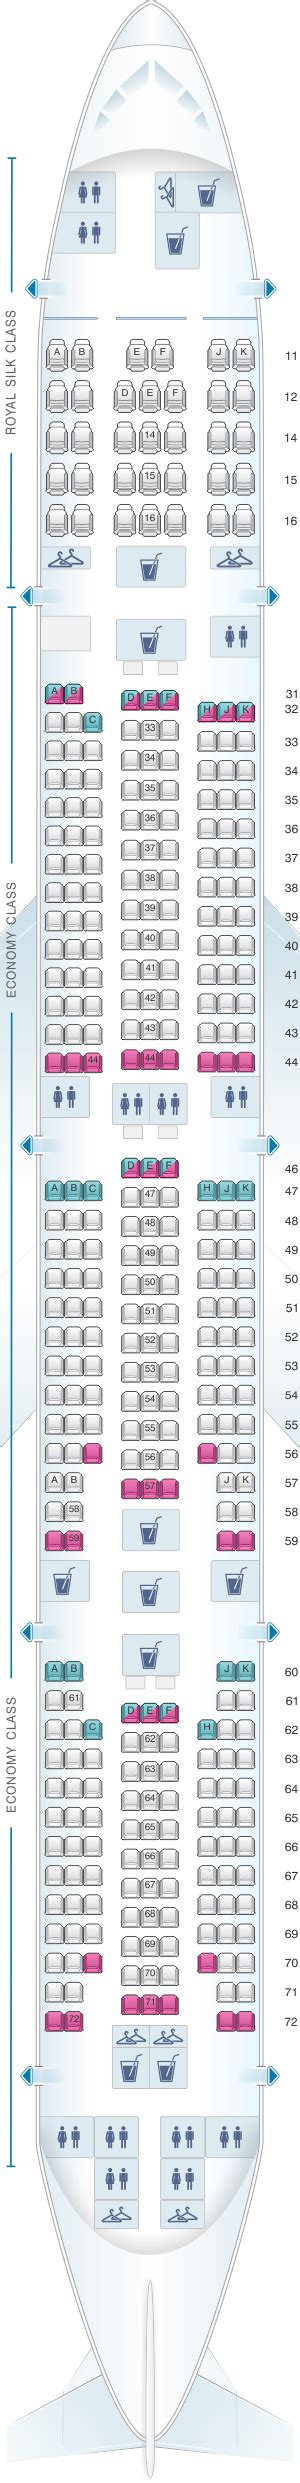 seat plan boeing 777 300er thai airways